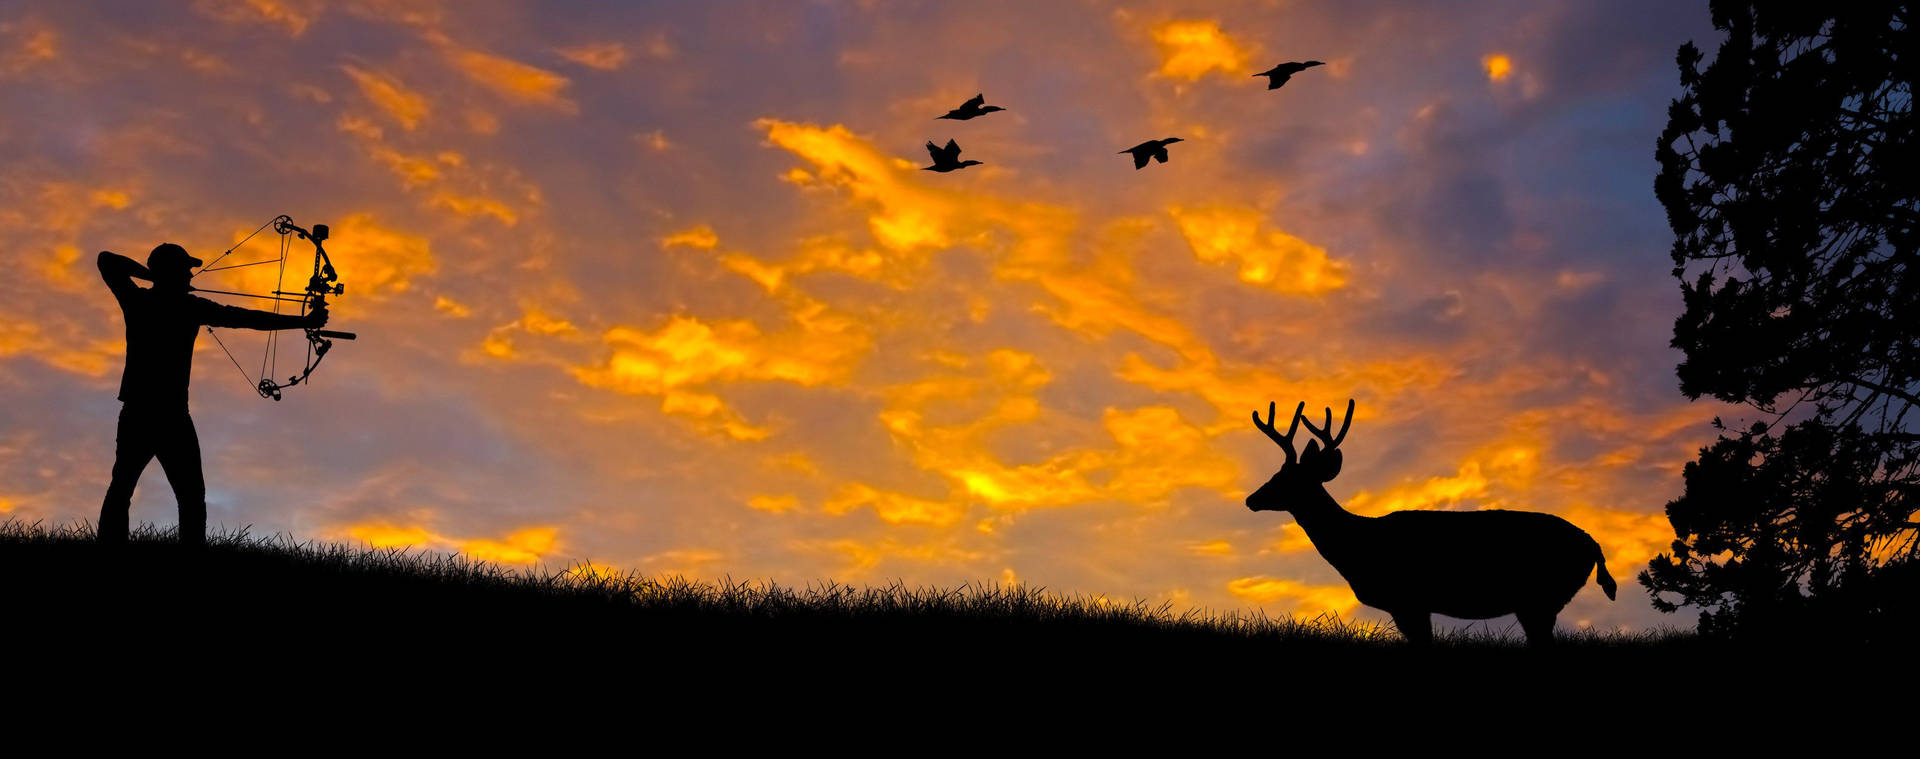 Download Silhouette Sunset Elk Hunting Wallpaper 